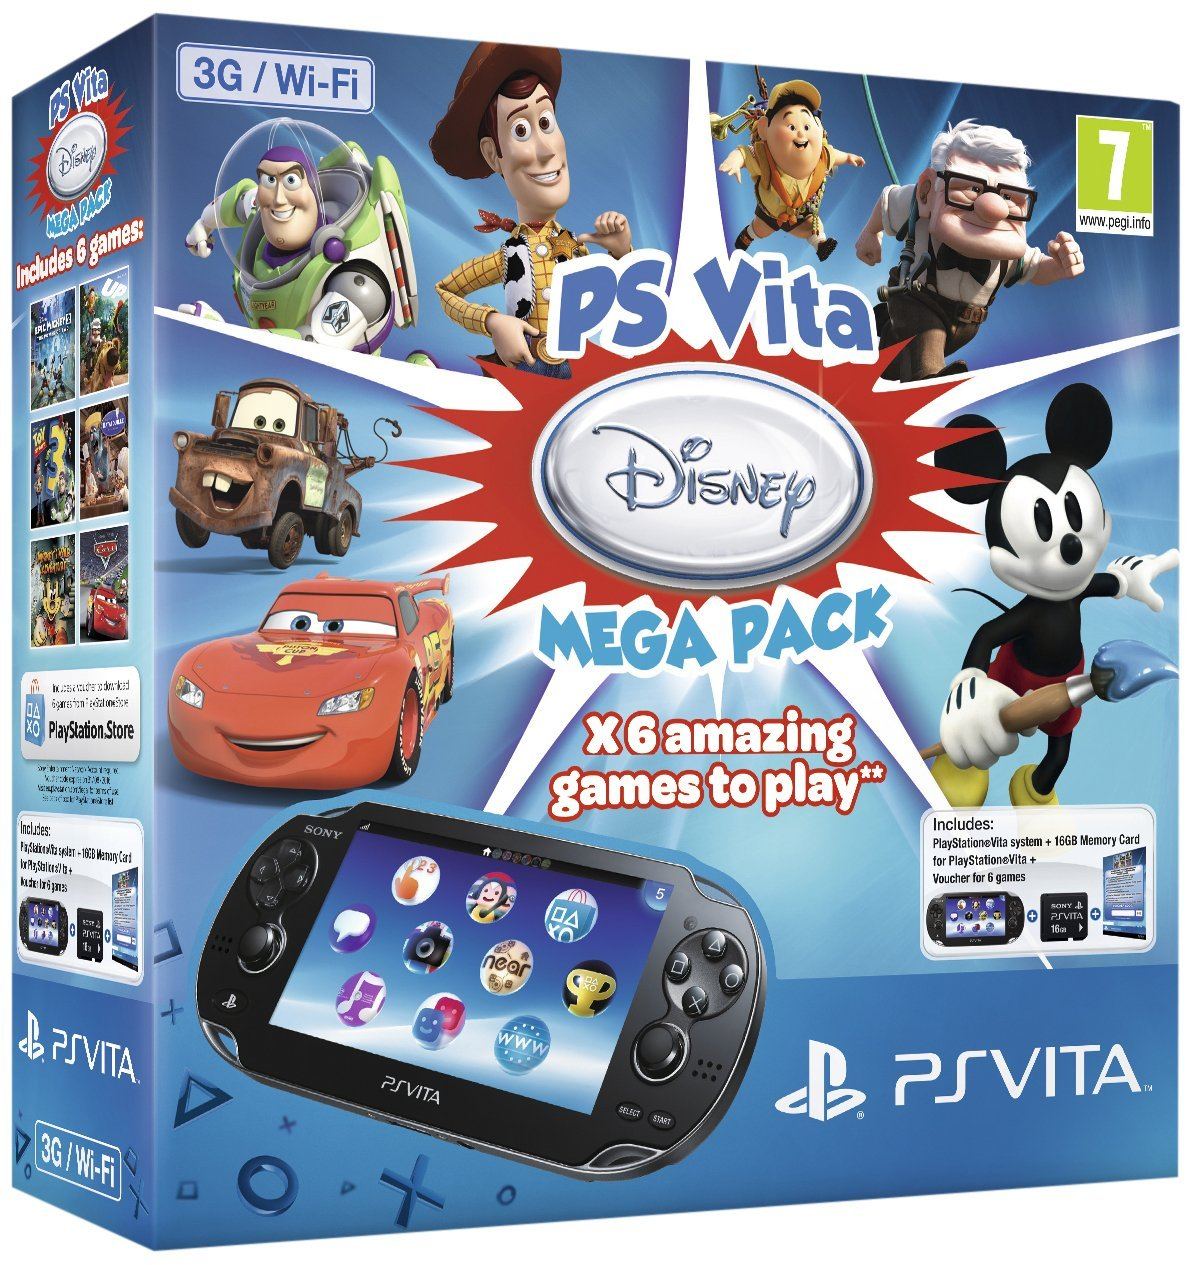 PS Vita PlayStation Vita - Disney Mega Pack 3G/Wi-Fi Model (Black)